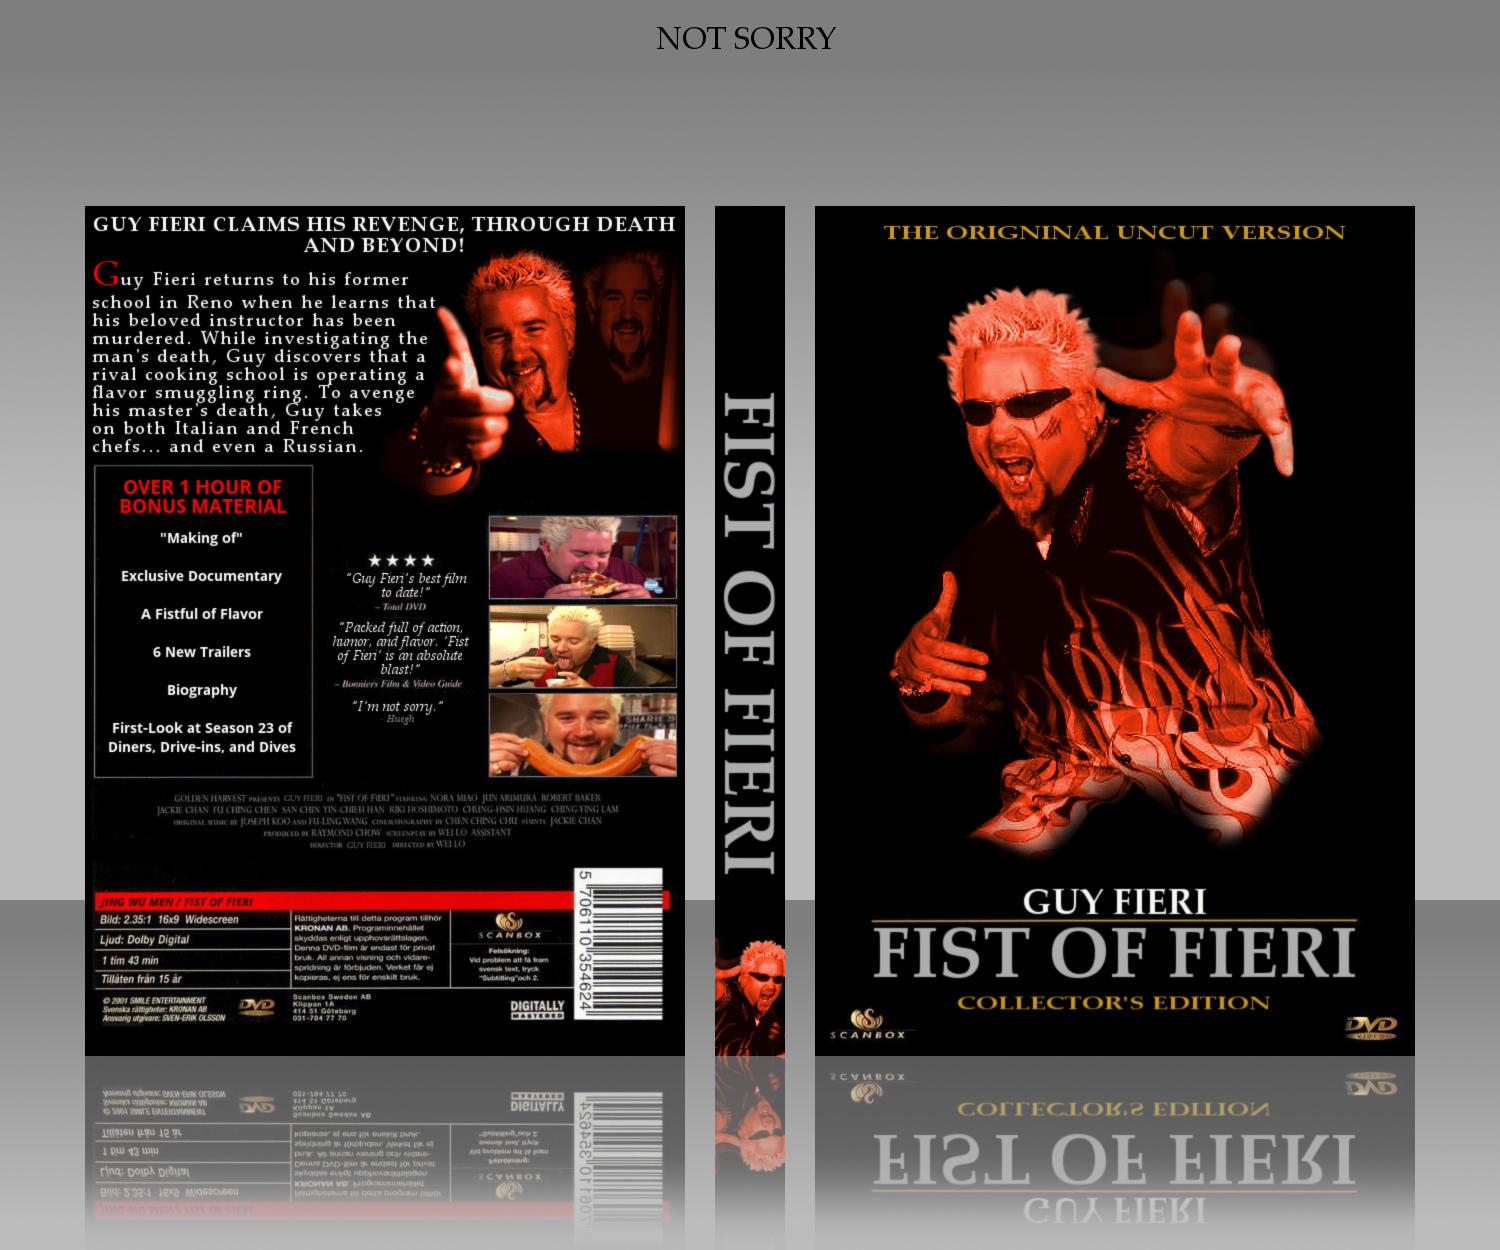 Fist of Fieri: Collector's Edition box cover